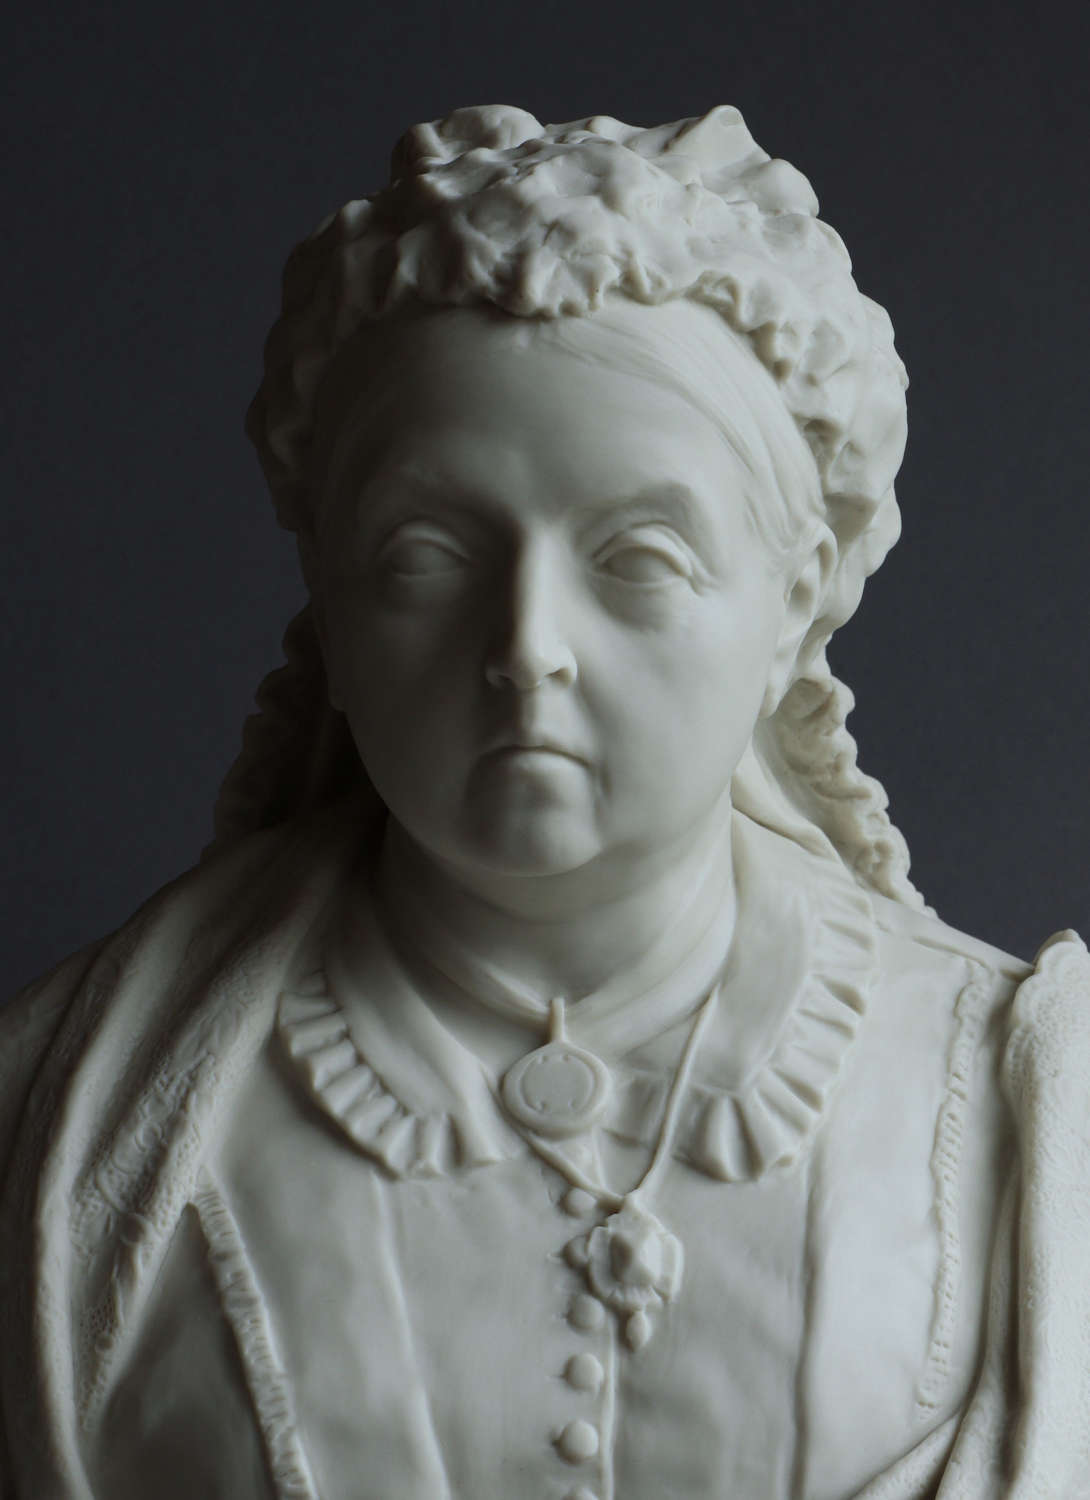 A large Parian Copeland Golden Jubilee bust of Queen Victoria